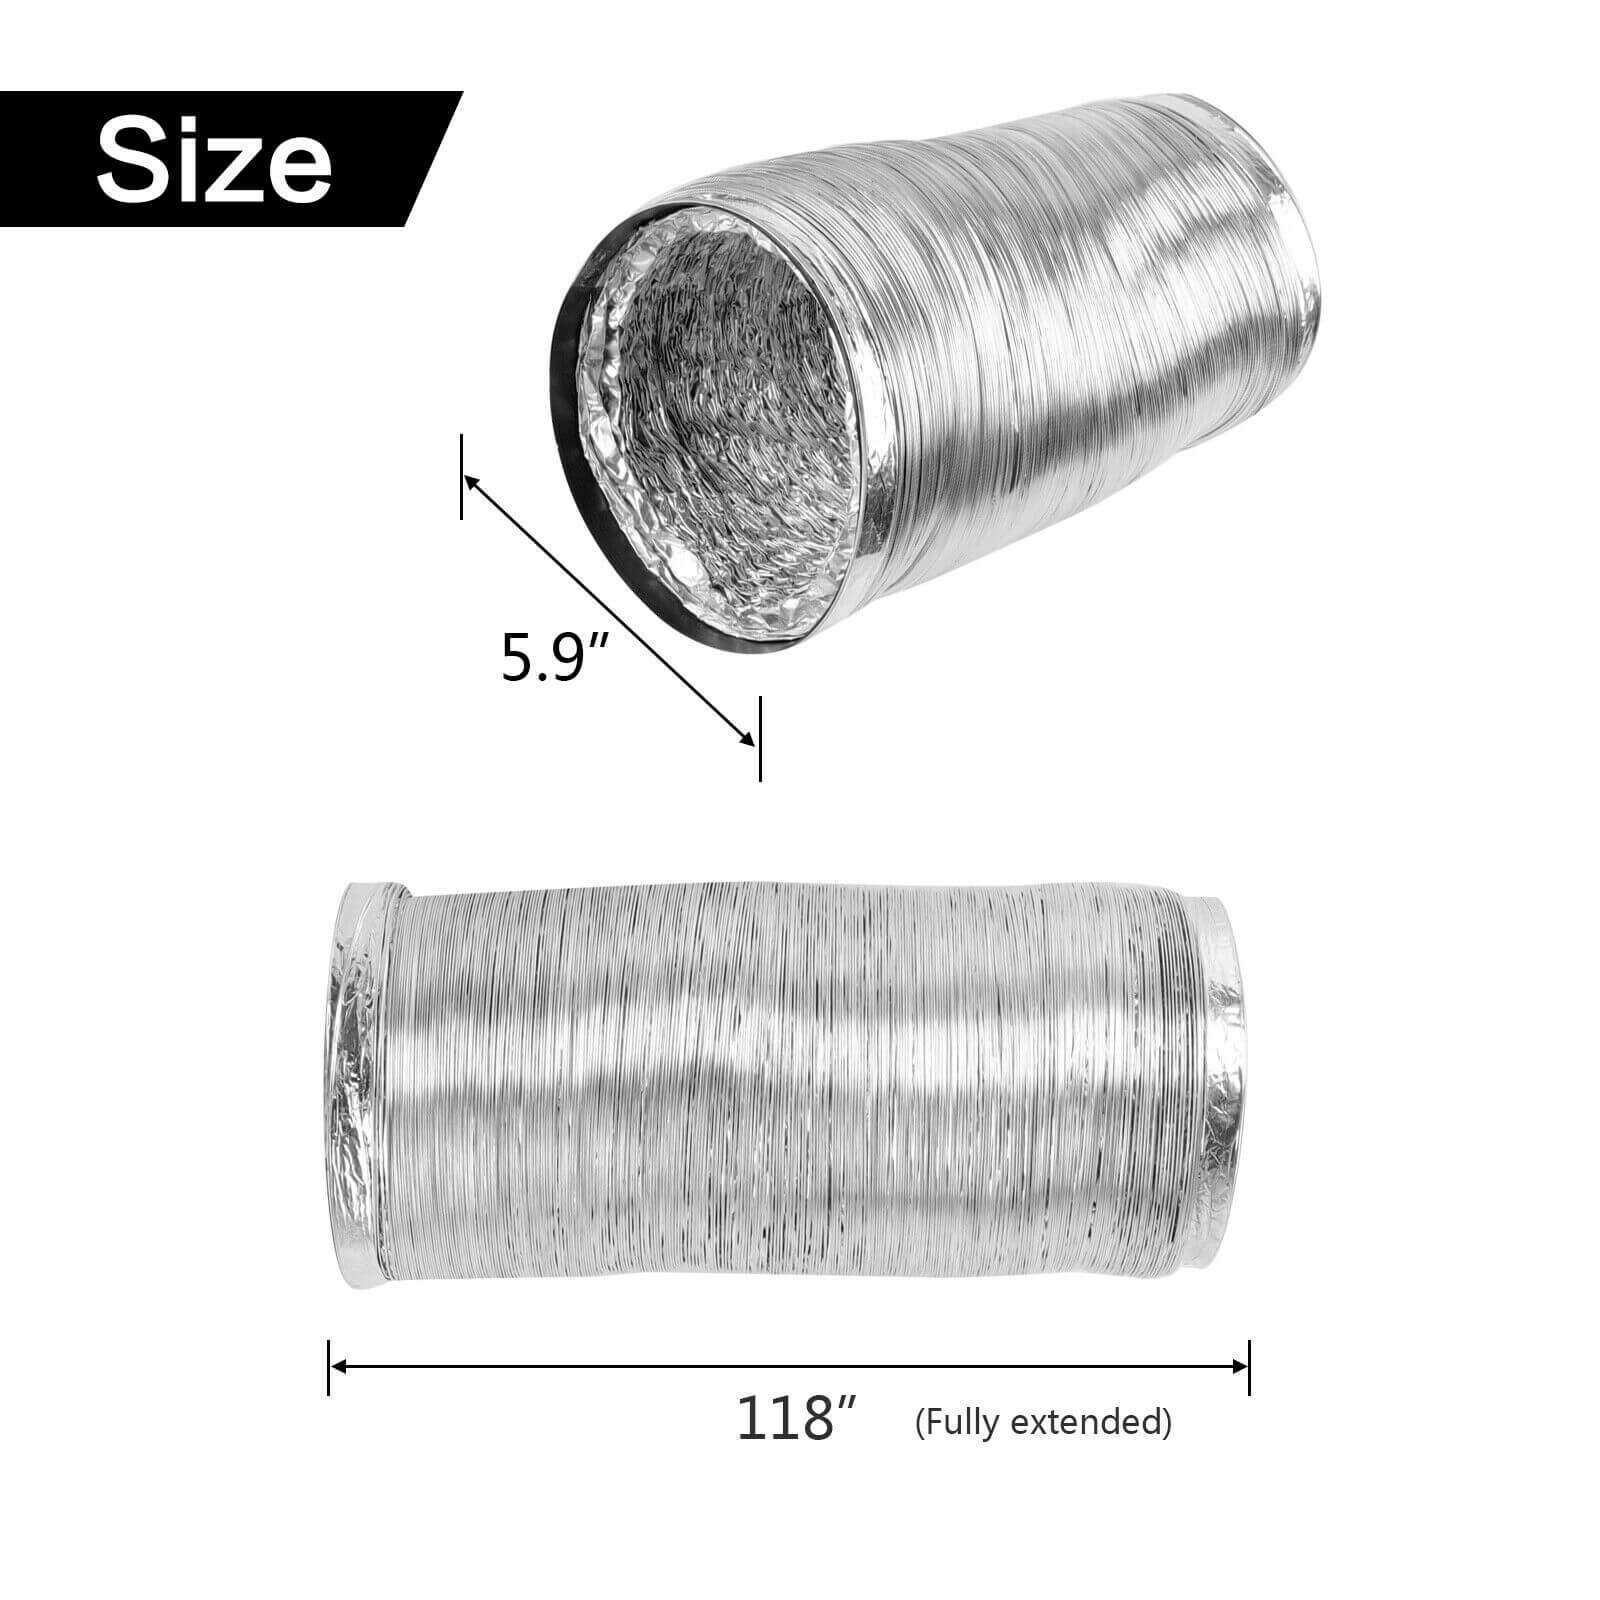 Size of 6" Non-Insulated Aluminum Air Ventilation Ducting Vent Hose